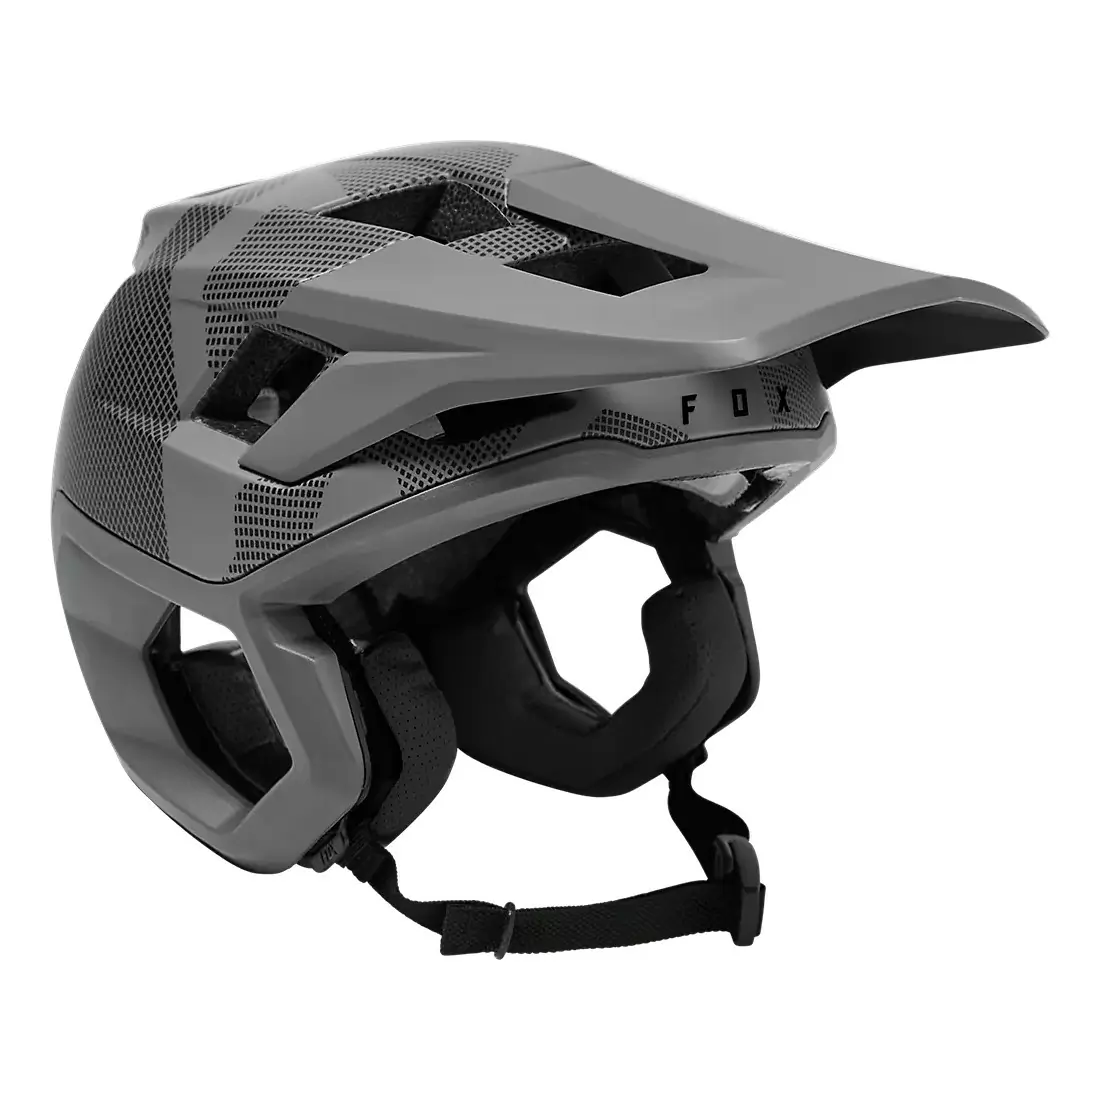 Dropframe Pro Camo Enduro Helmet Gray Camouflage Size M (54-56cm) - image